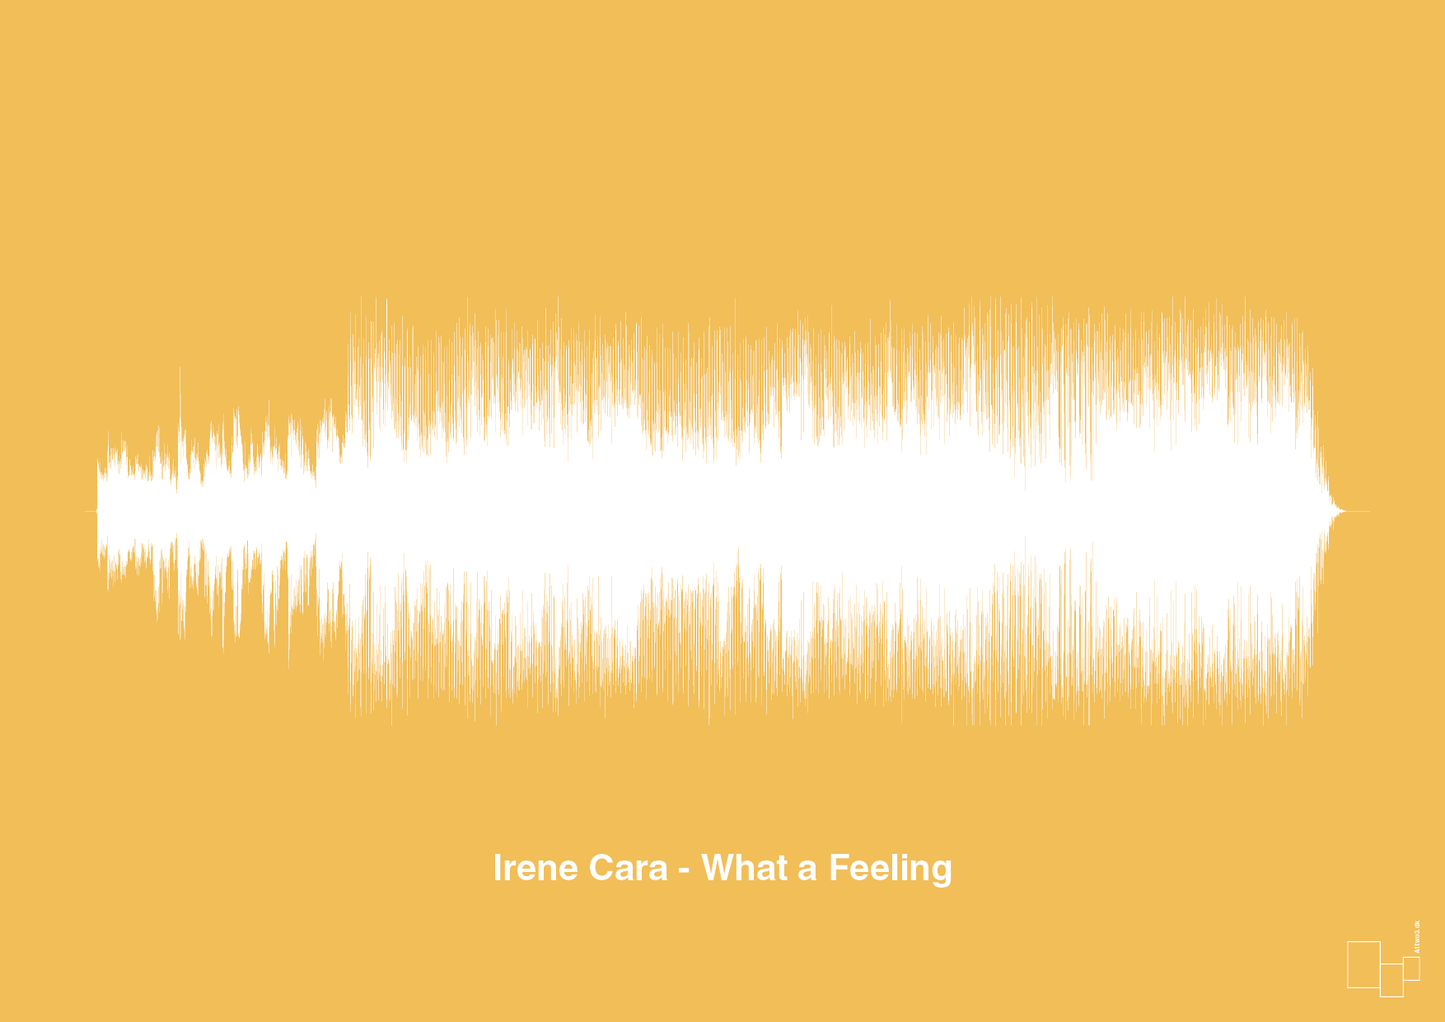 irene cara - what a feeling - Plakat med Musik i Honeycomb